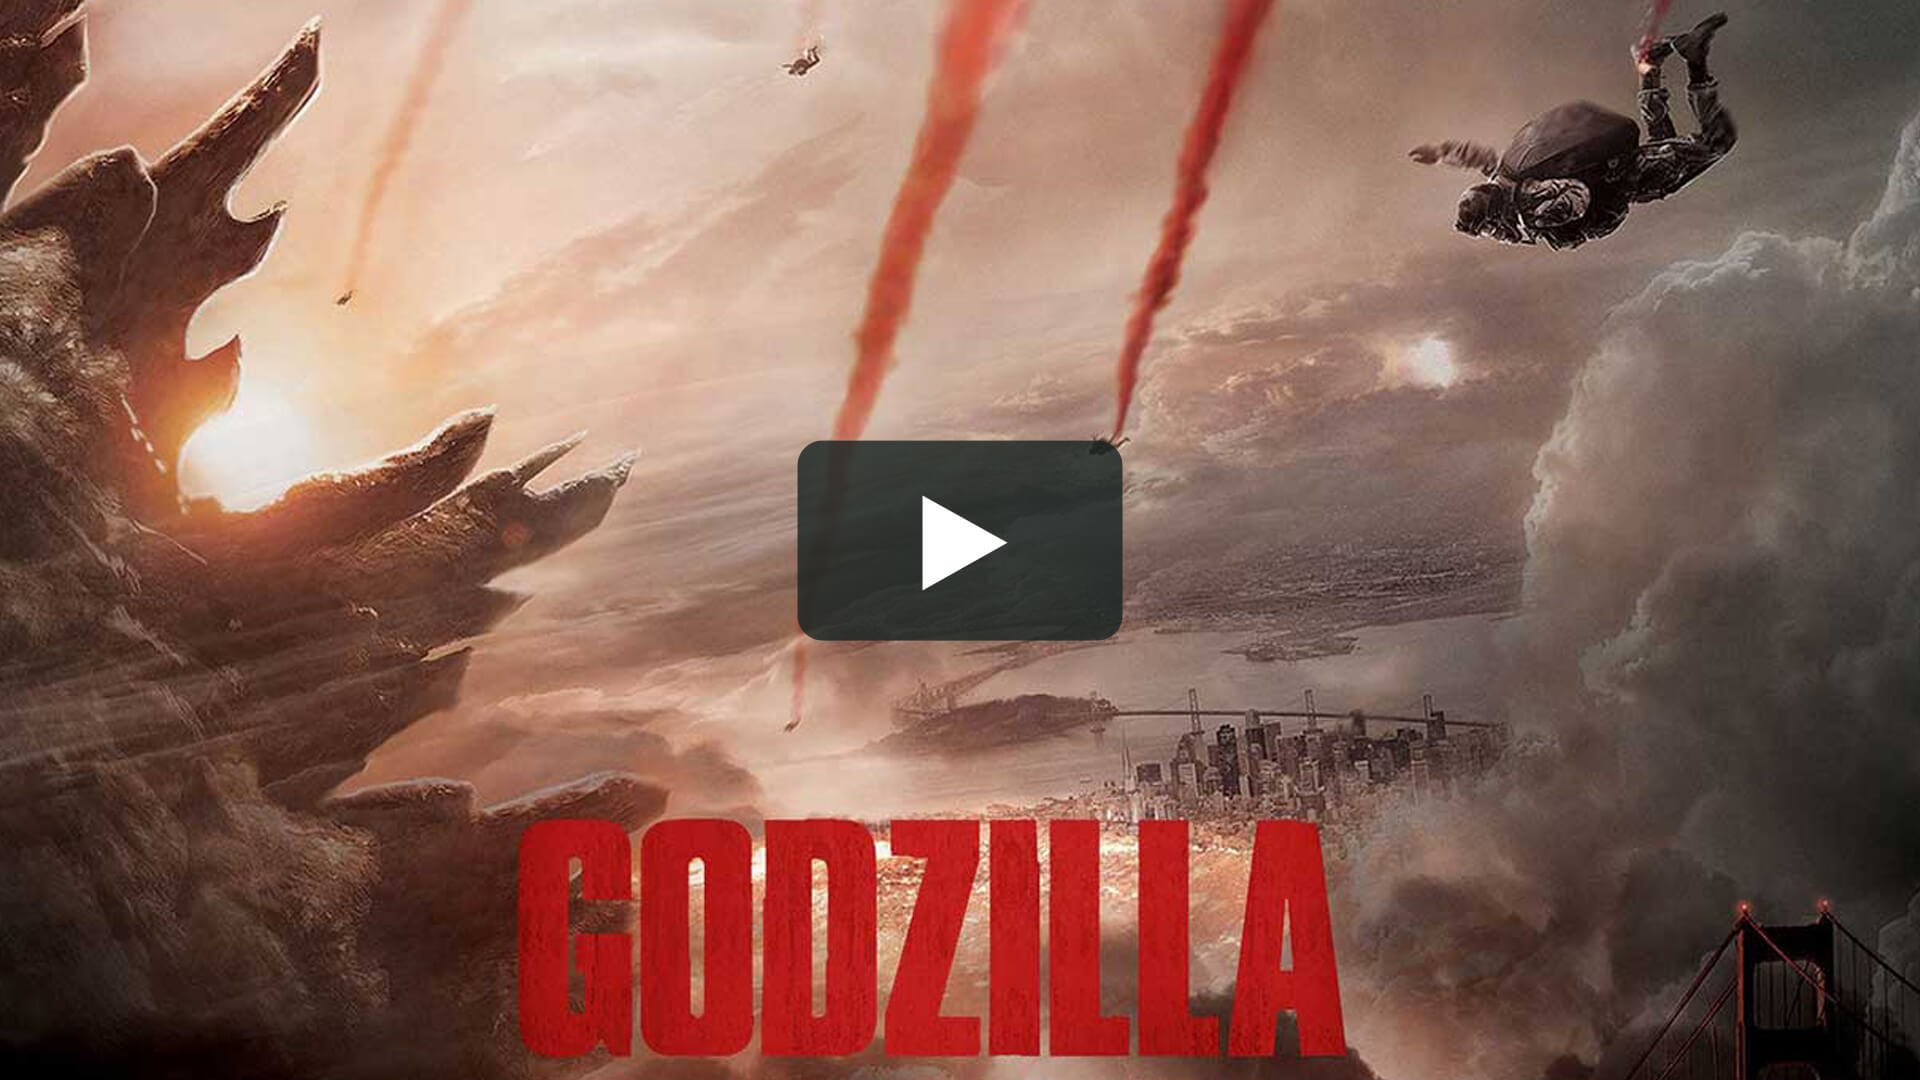 Godzilla - 哥斯拉